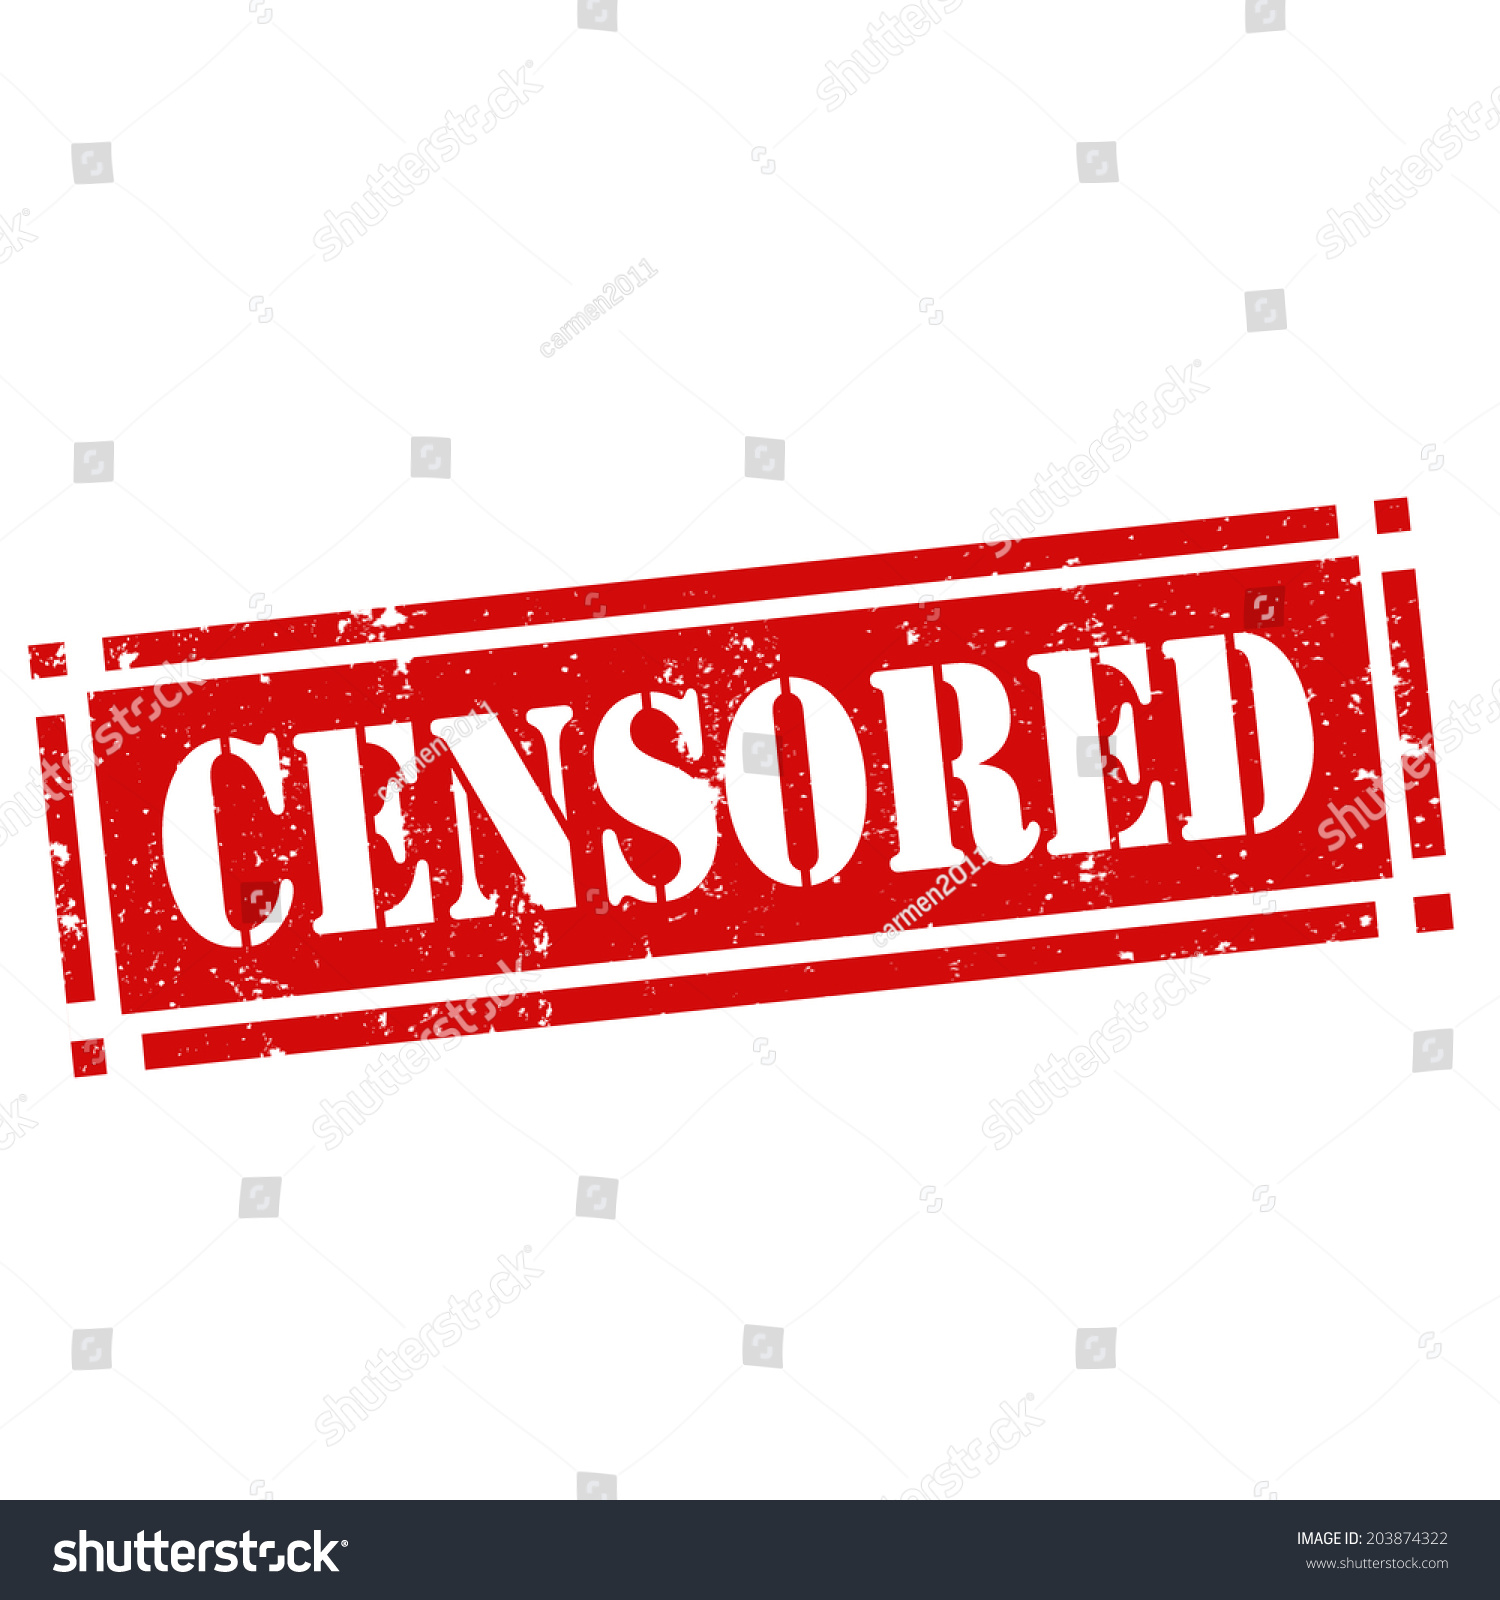  censored